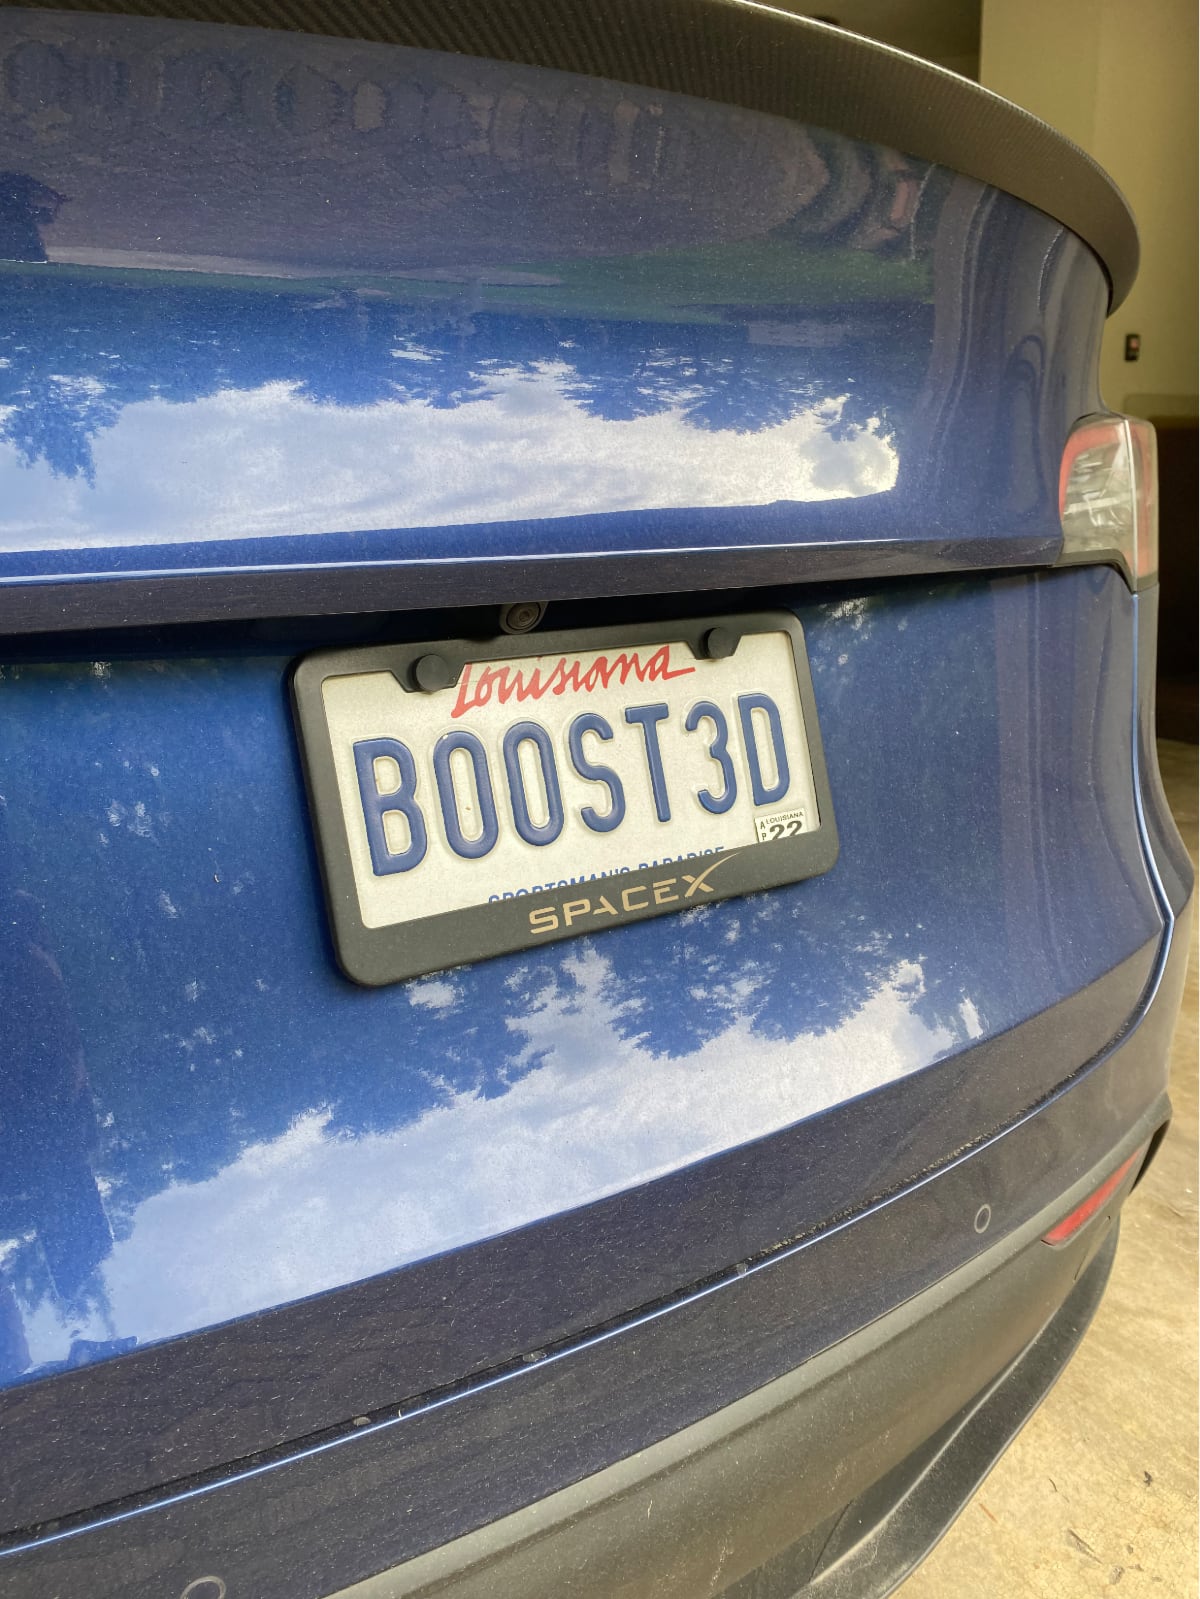 funny Tesla license plate - boost3d